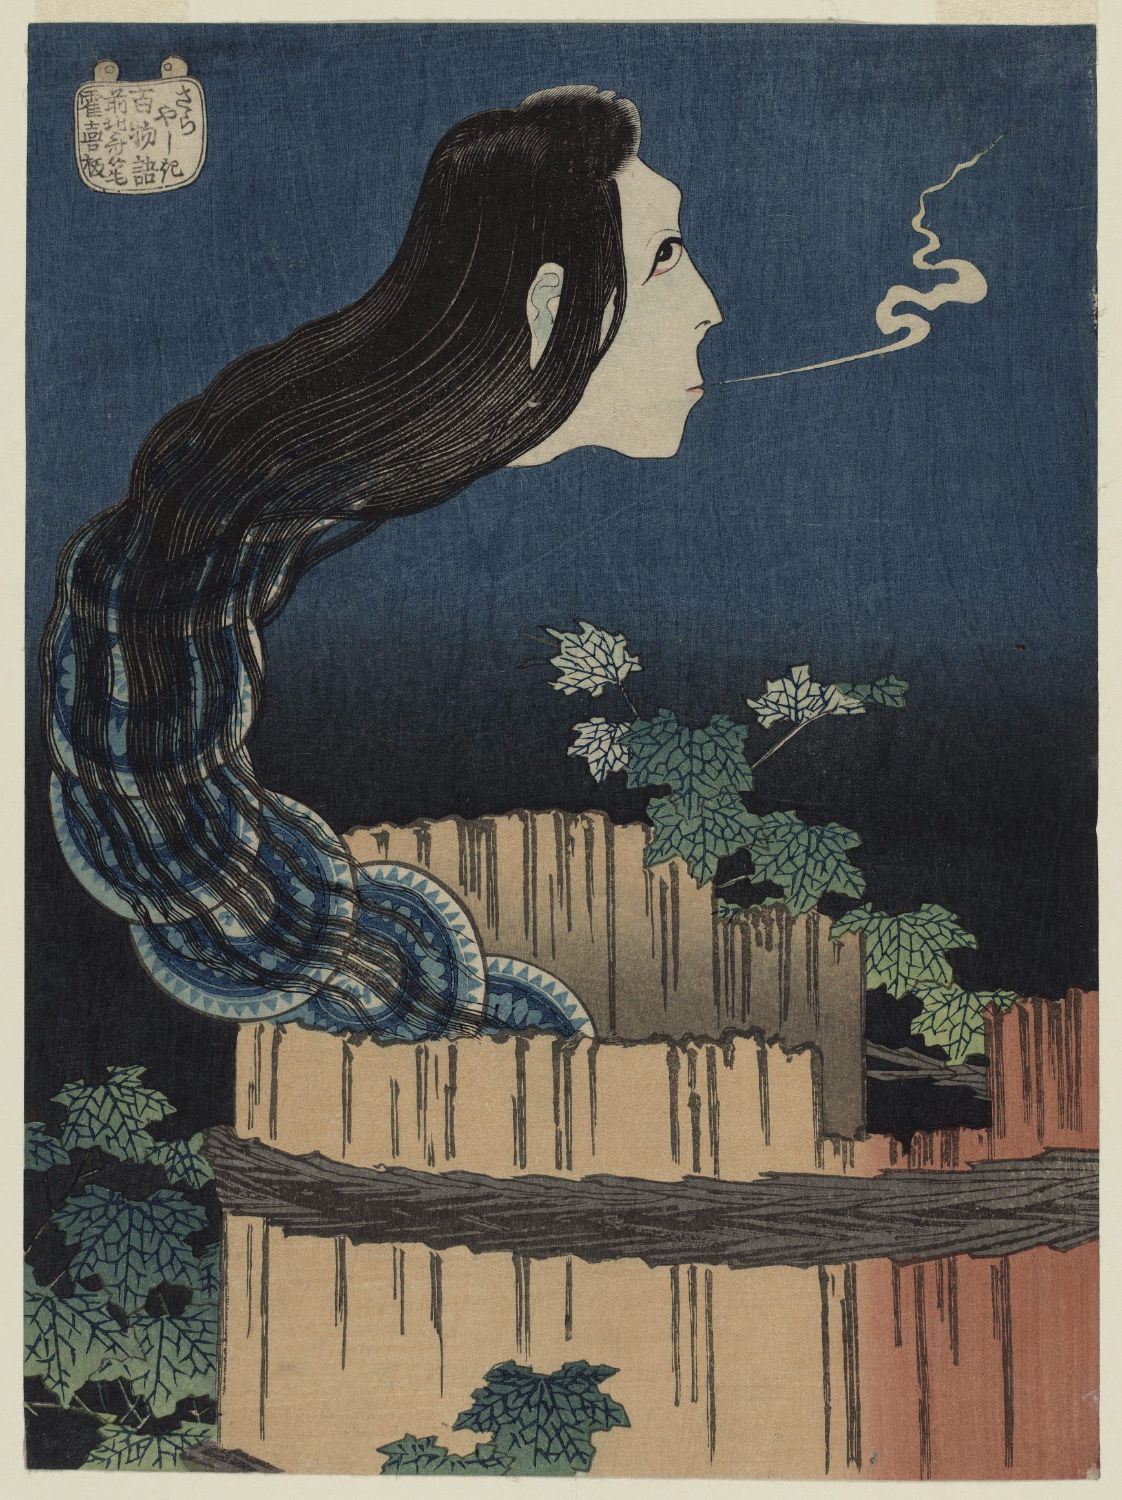 The Mansion of the Plates by Katsushika Hokusai - 1831/32 - 23.7 x 17.6 cm Museum of Fine Arts Boston